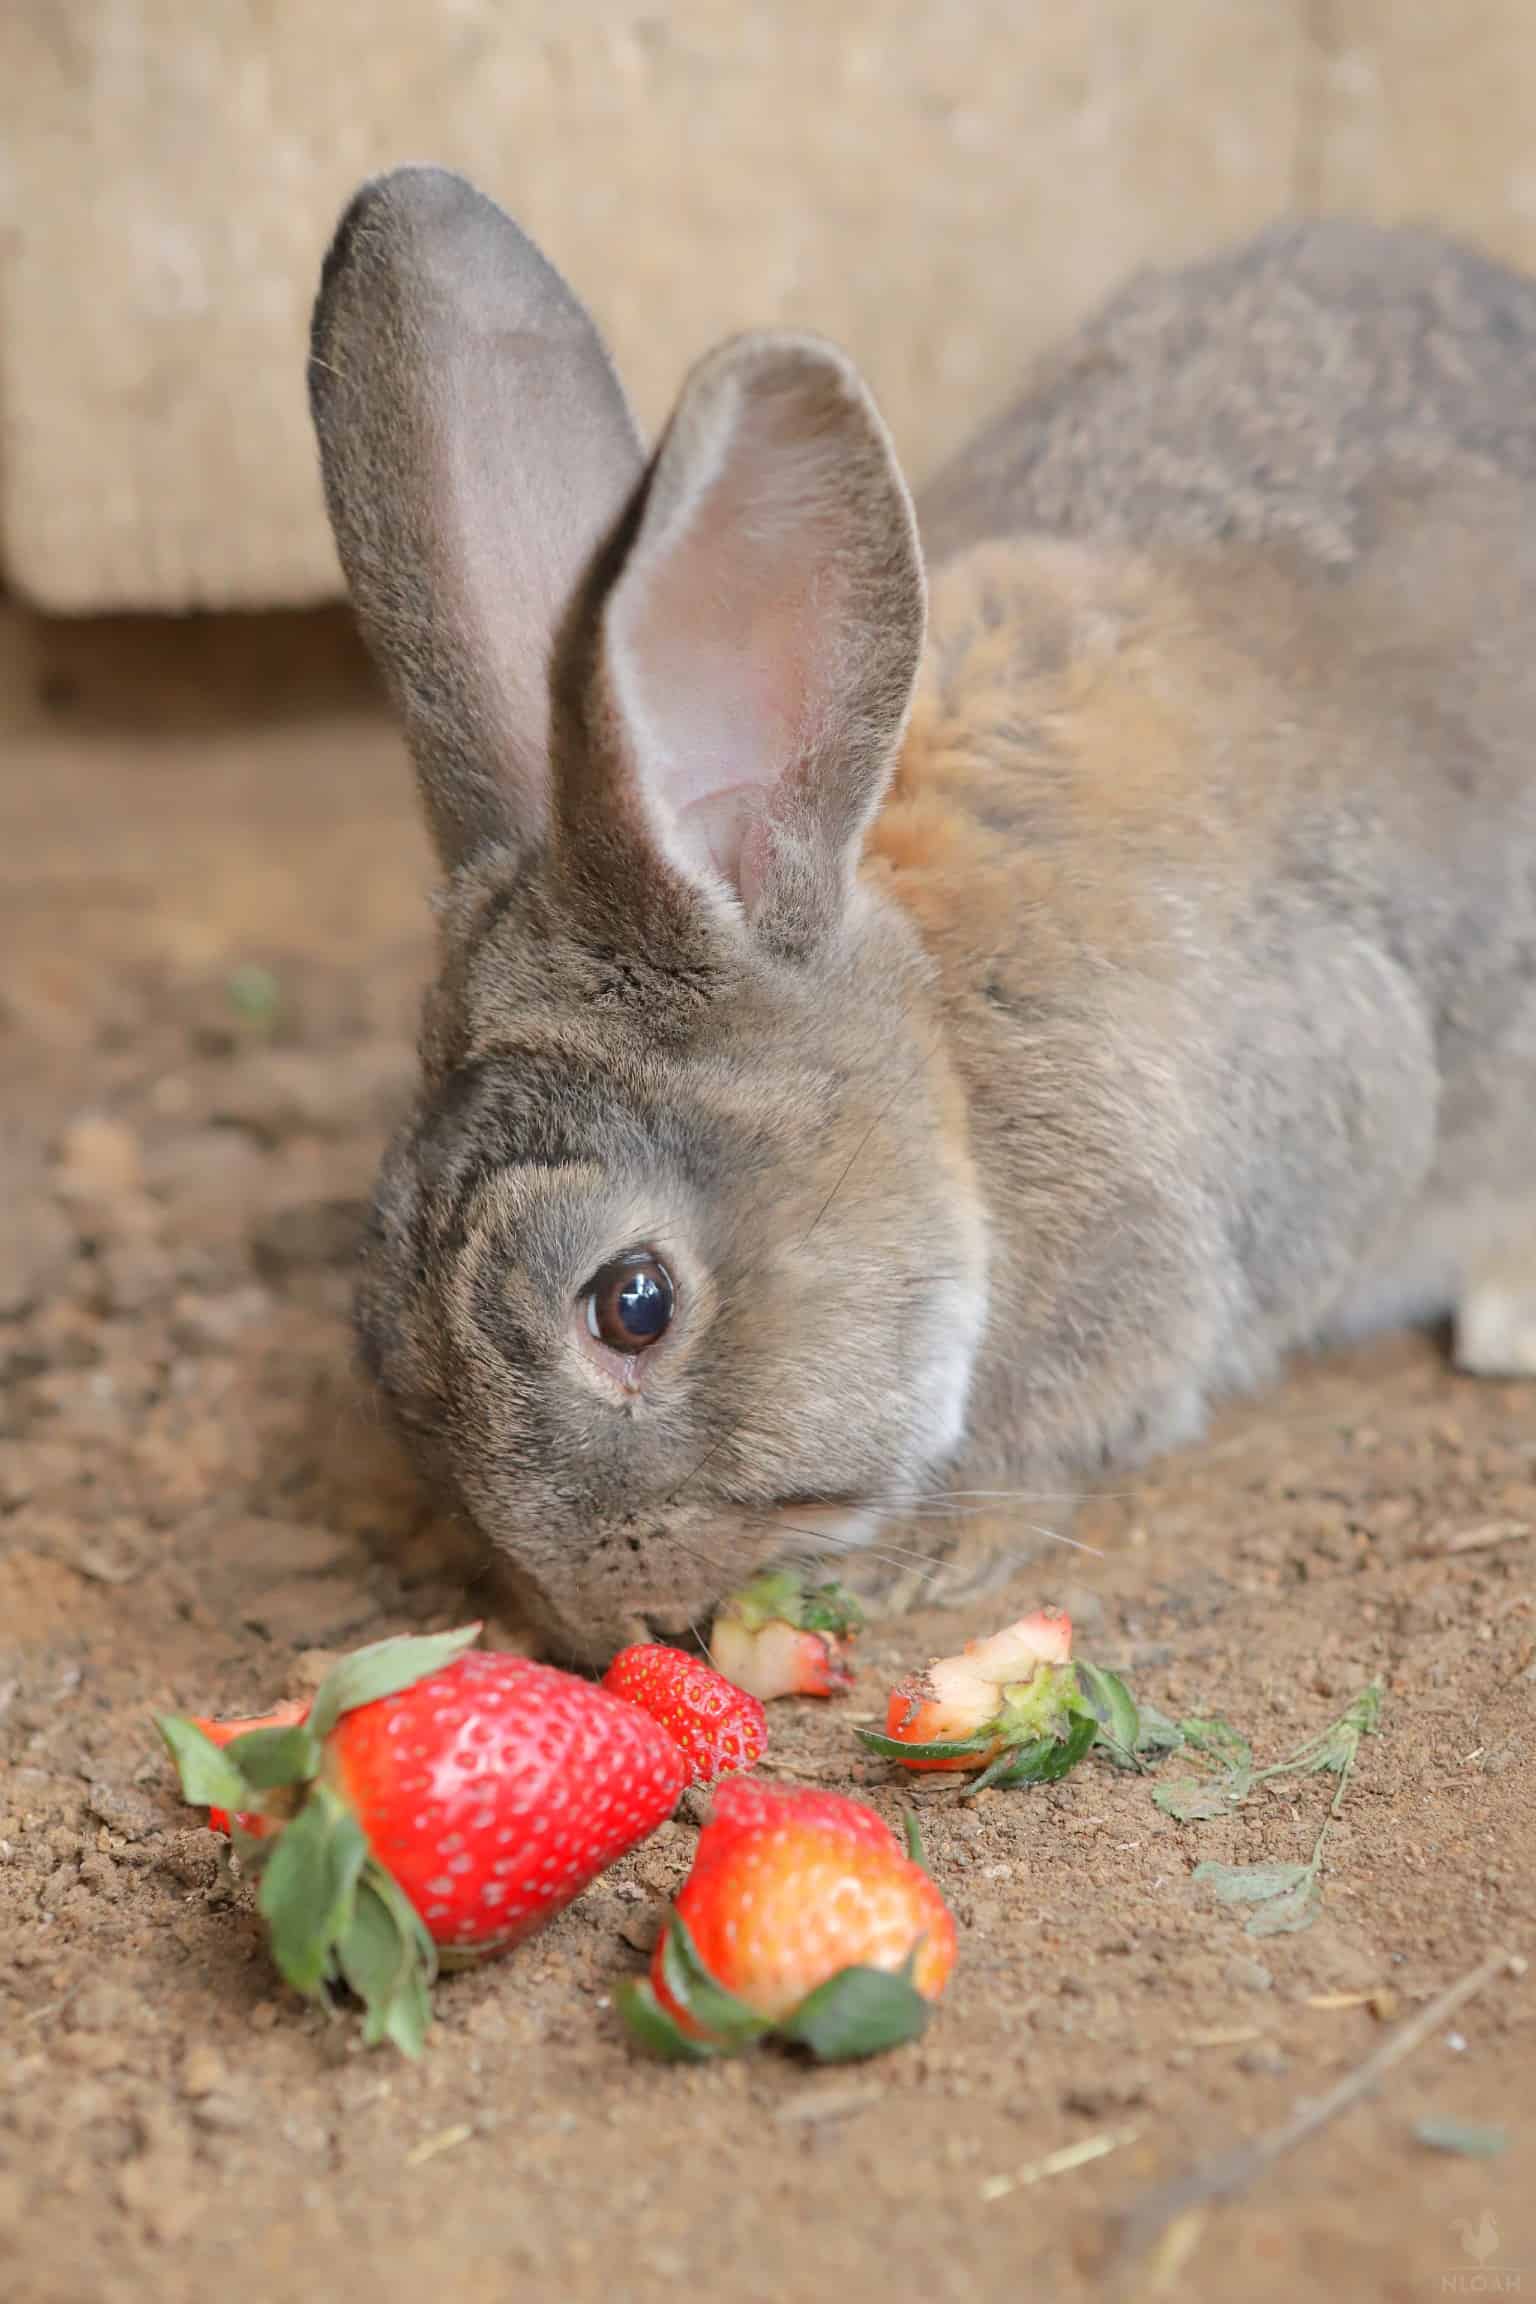 a rabbit eating strawberries